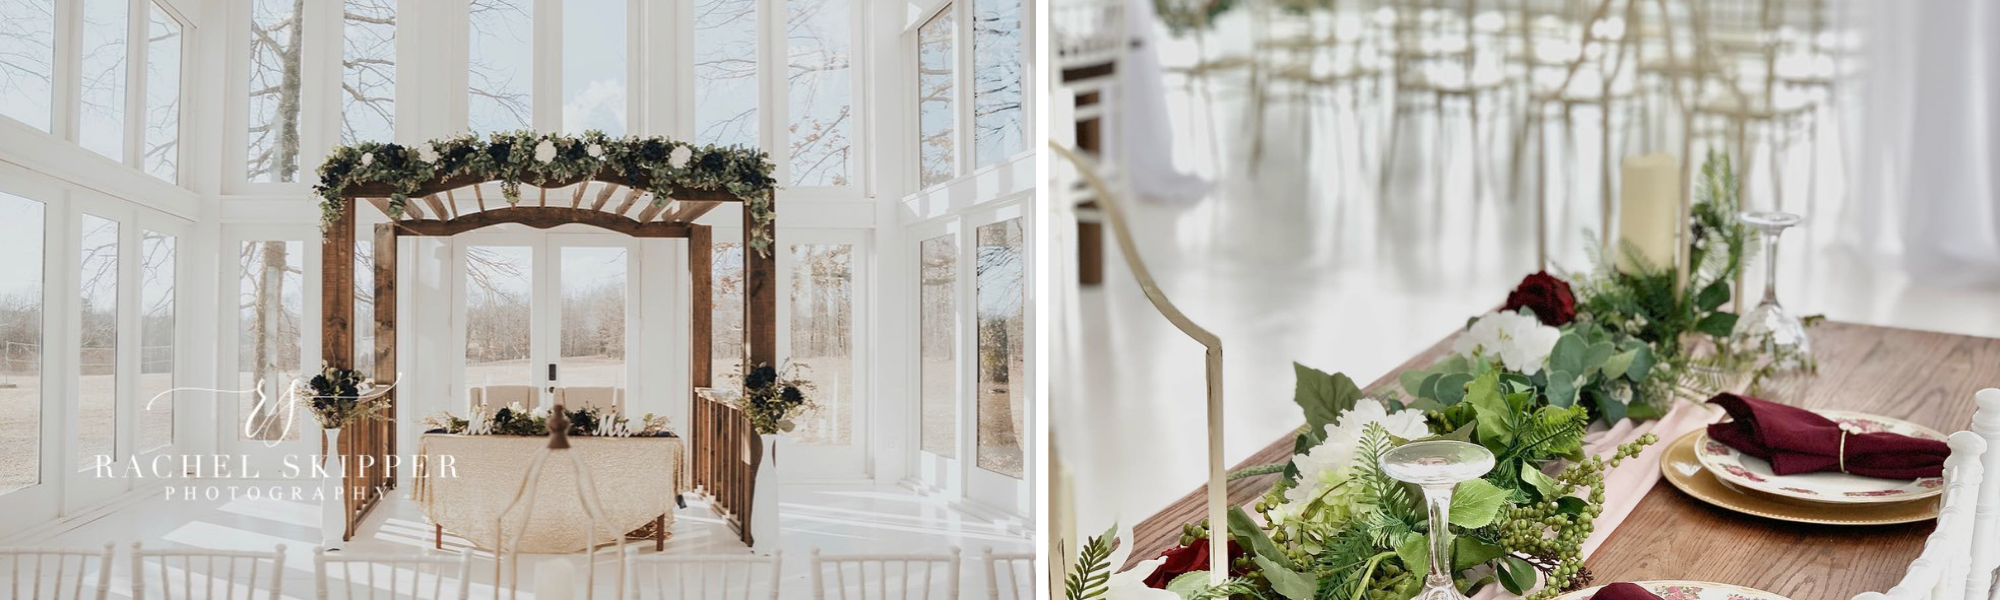 wedding arch and wedding reception table 